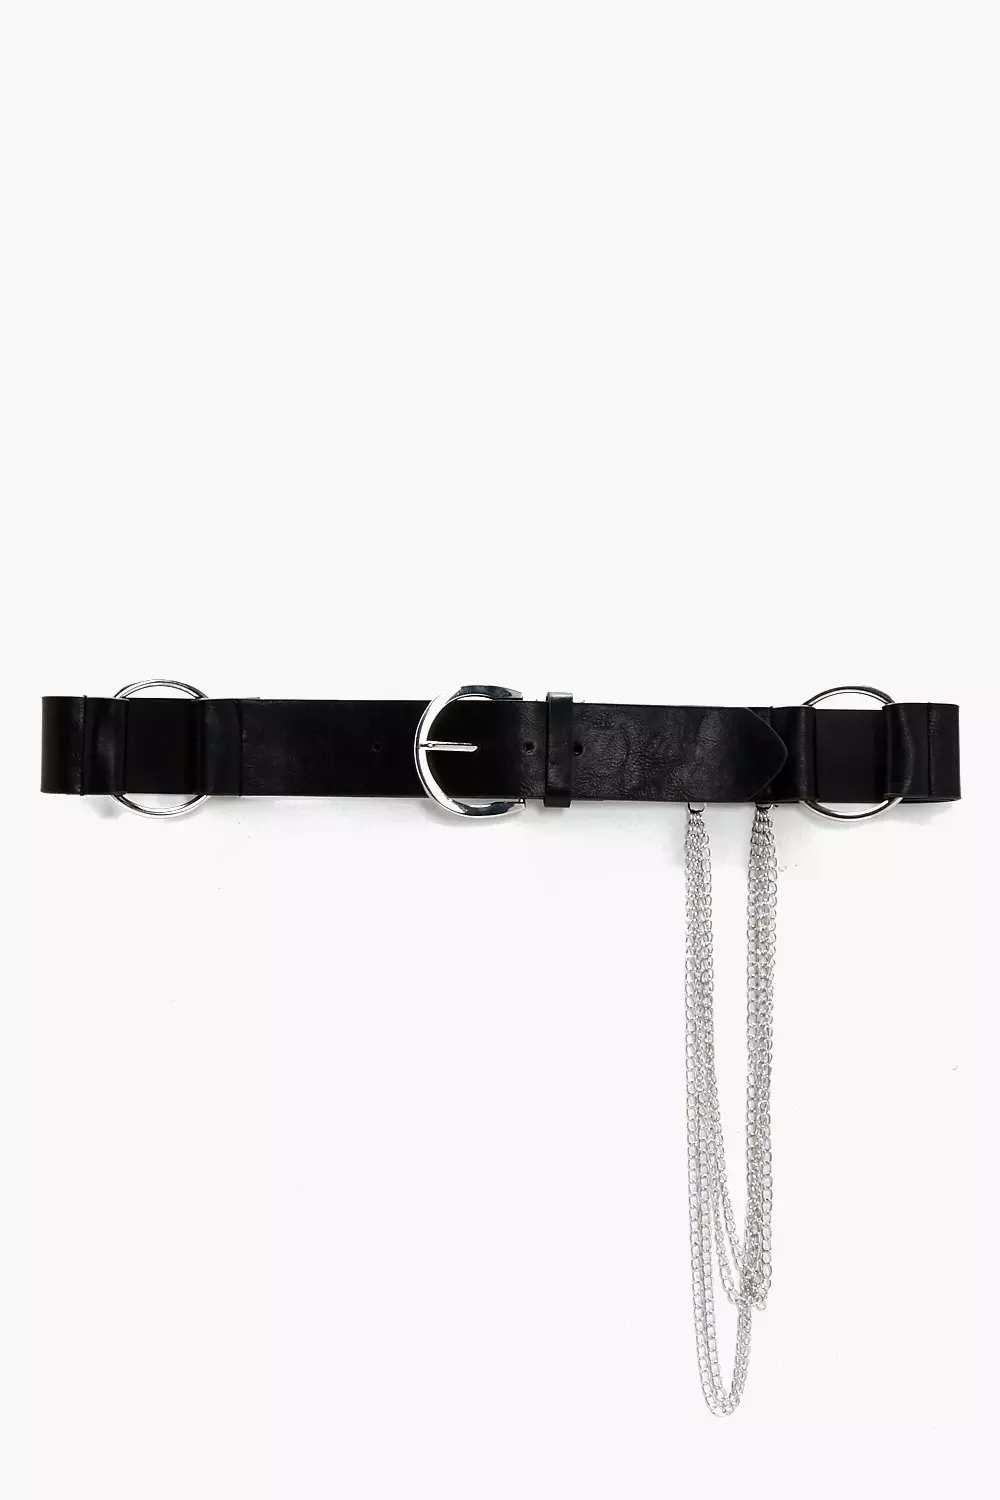 Zoe Large O Ring Chain Detail Belt Boohoo